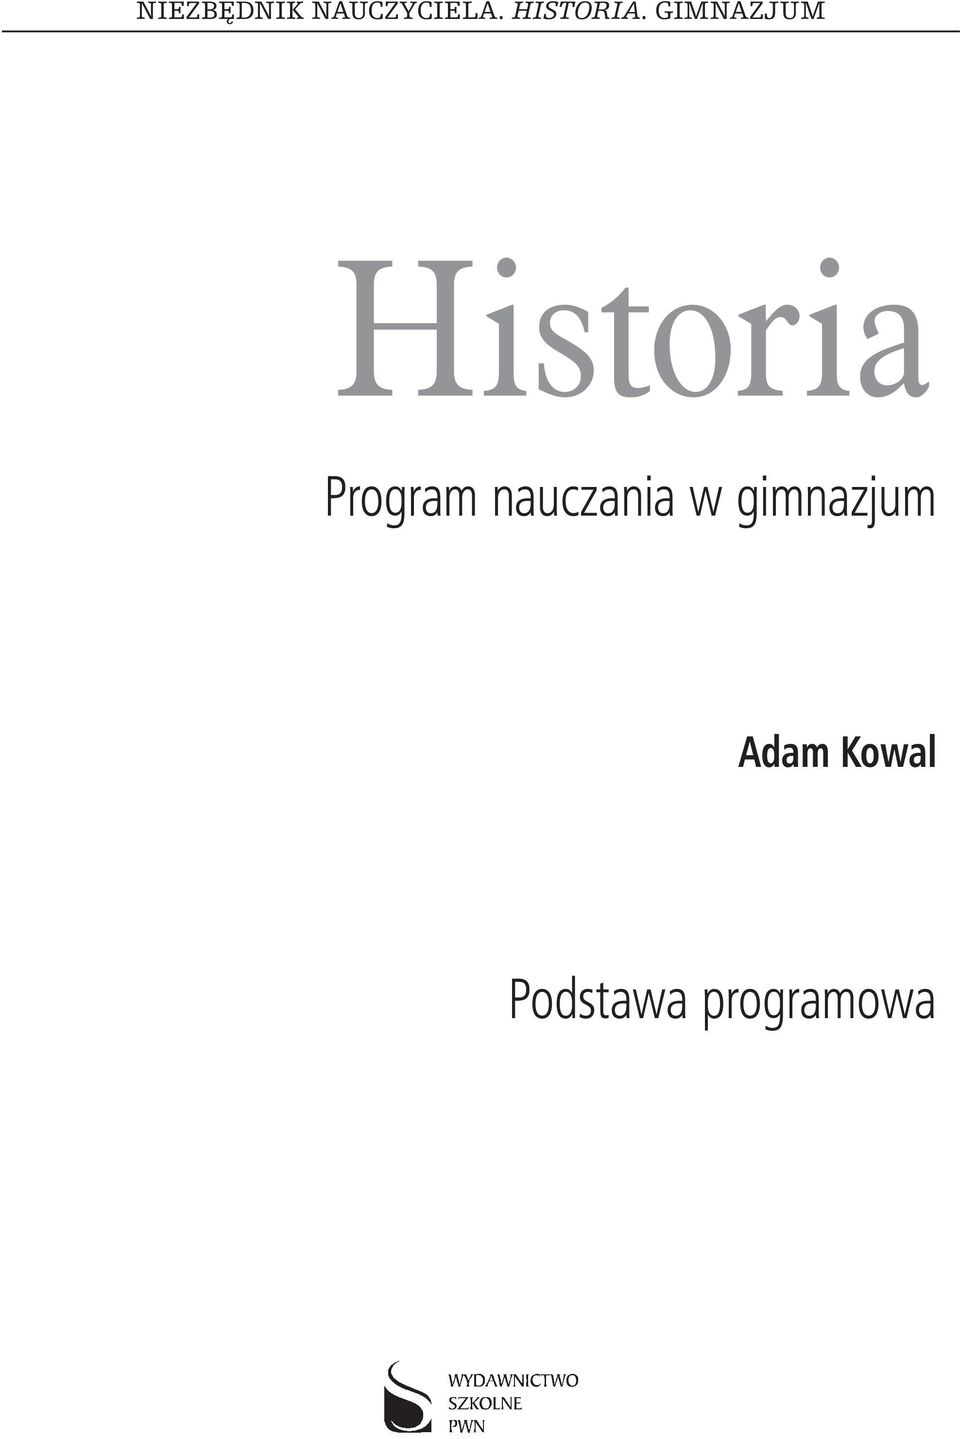 GIMNAZJUM Historia Program